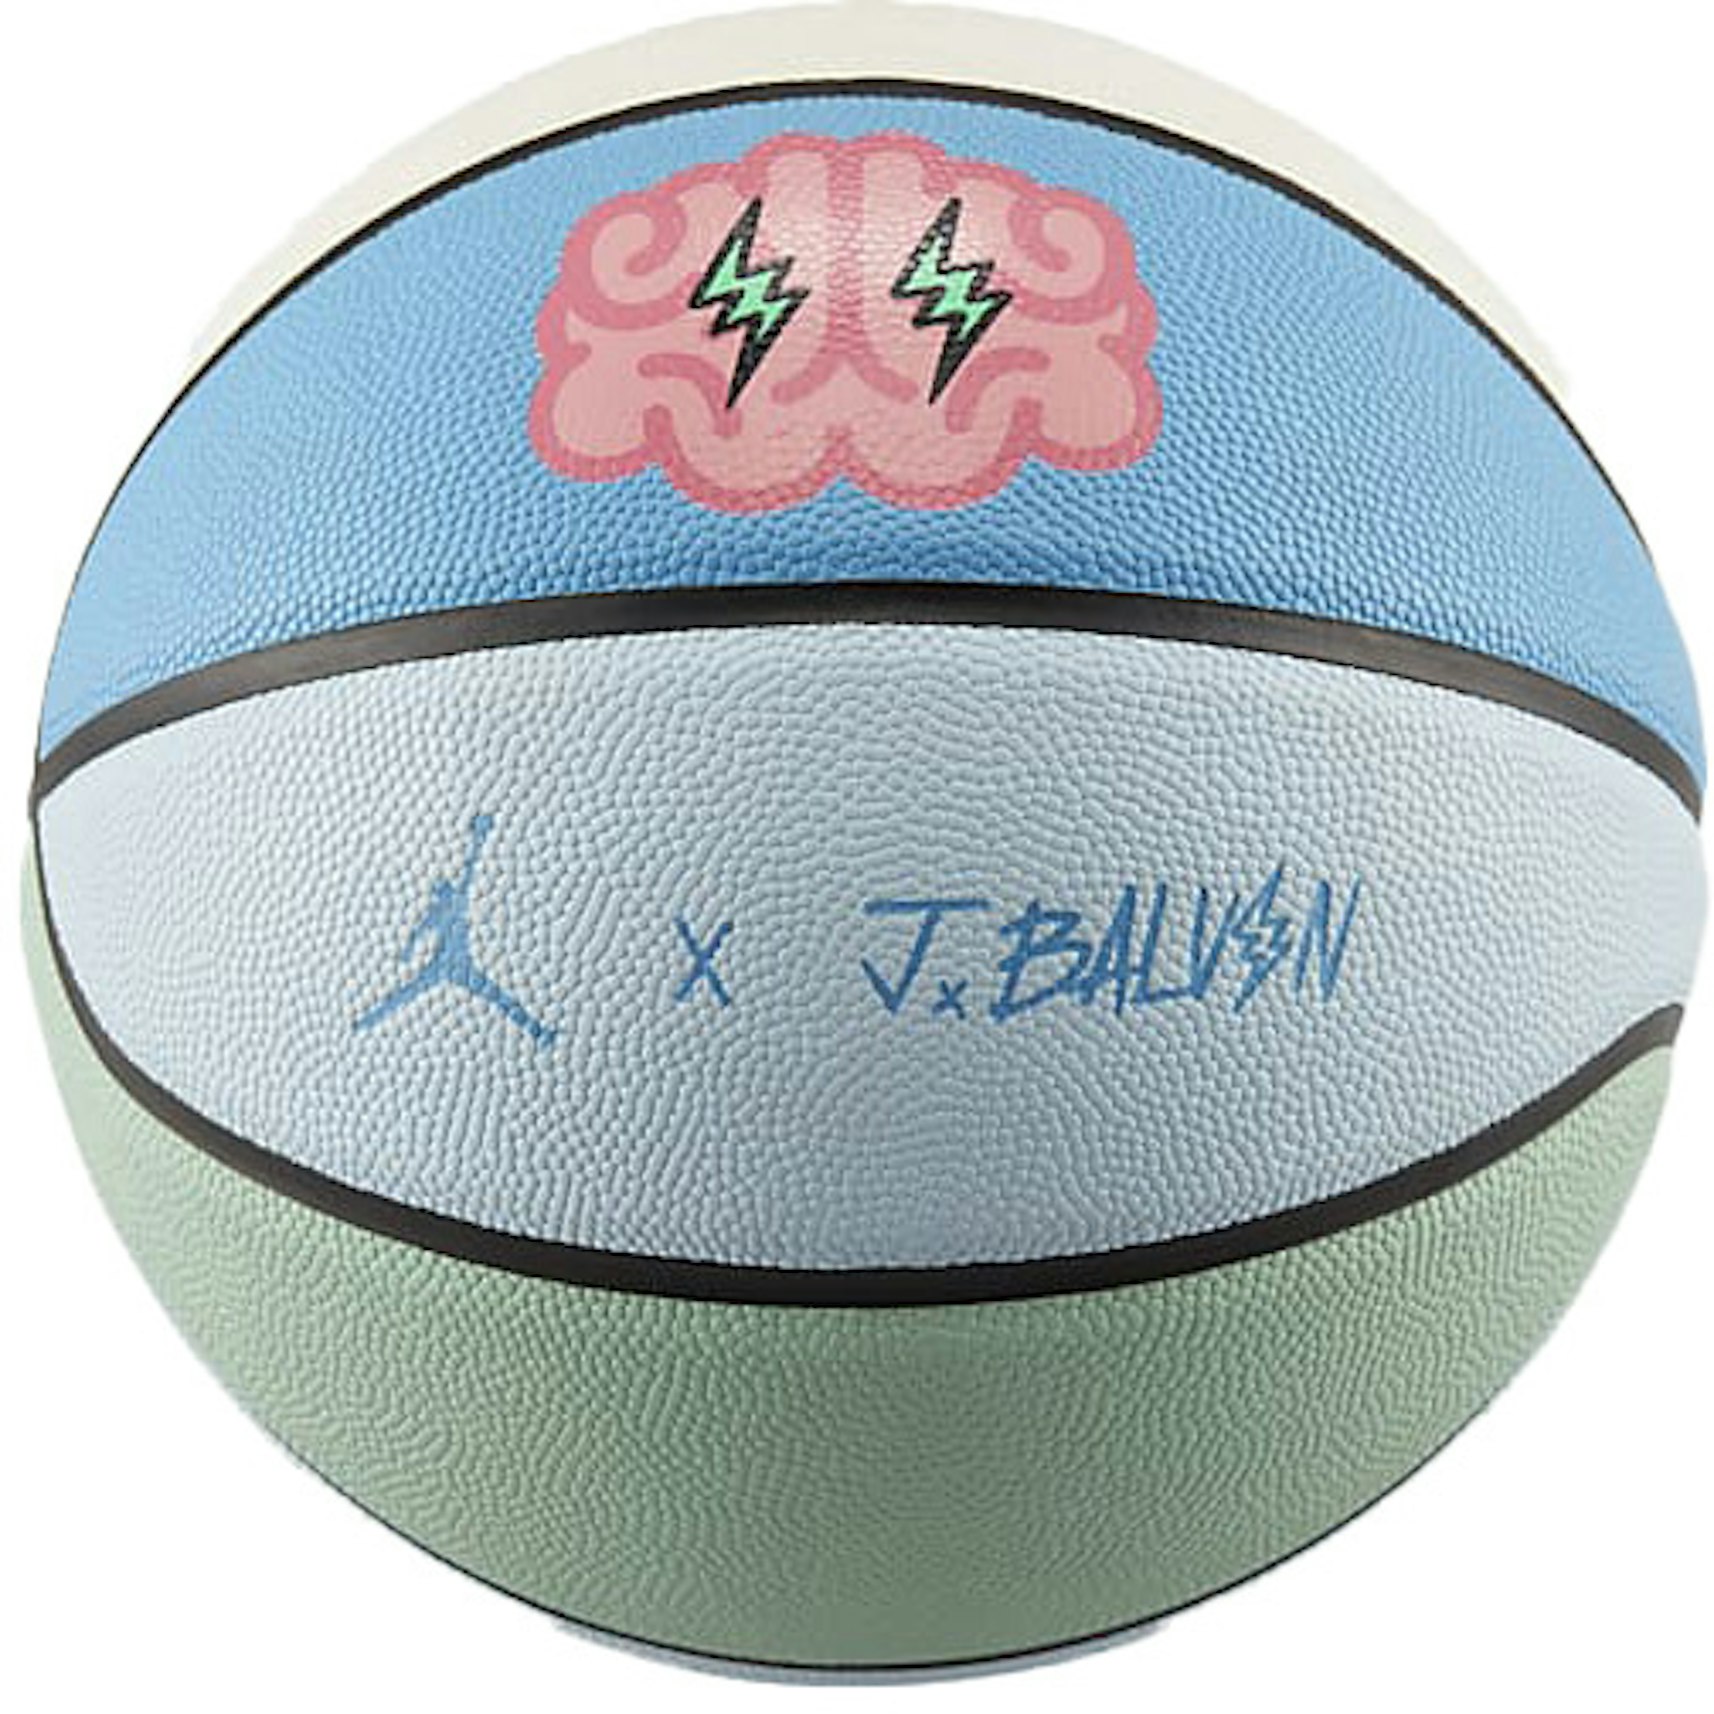 Jordan x JBalvin Everyday Court Basketball - US